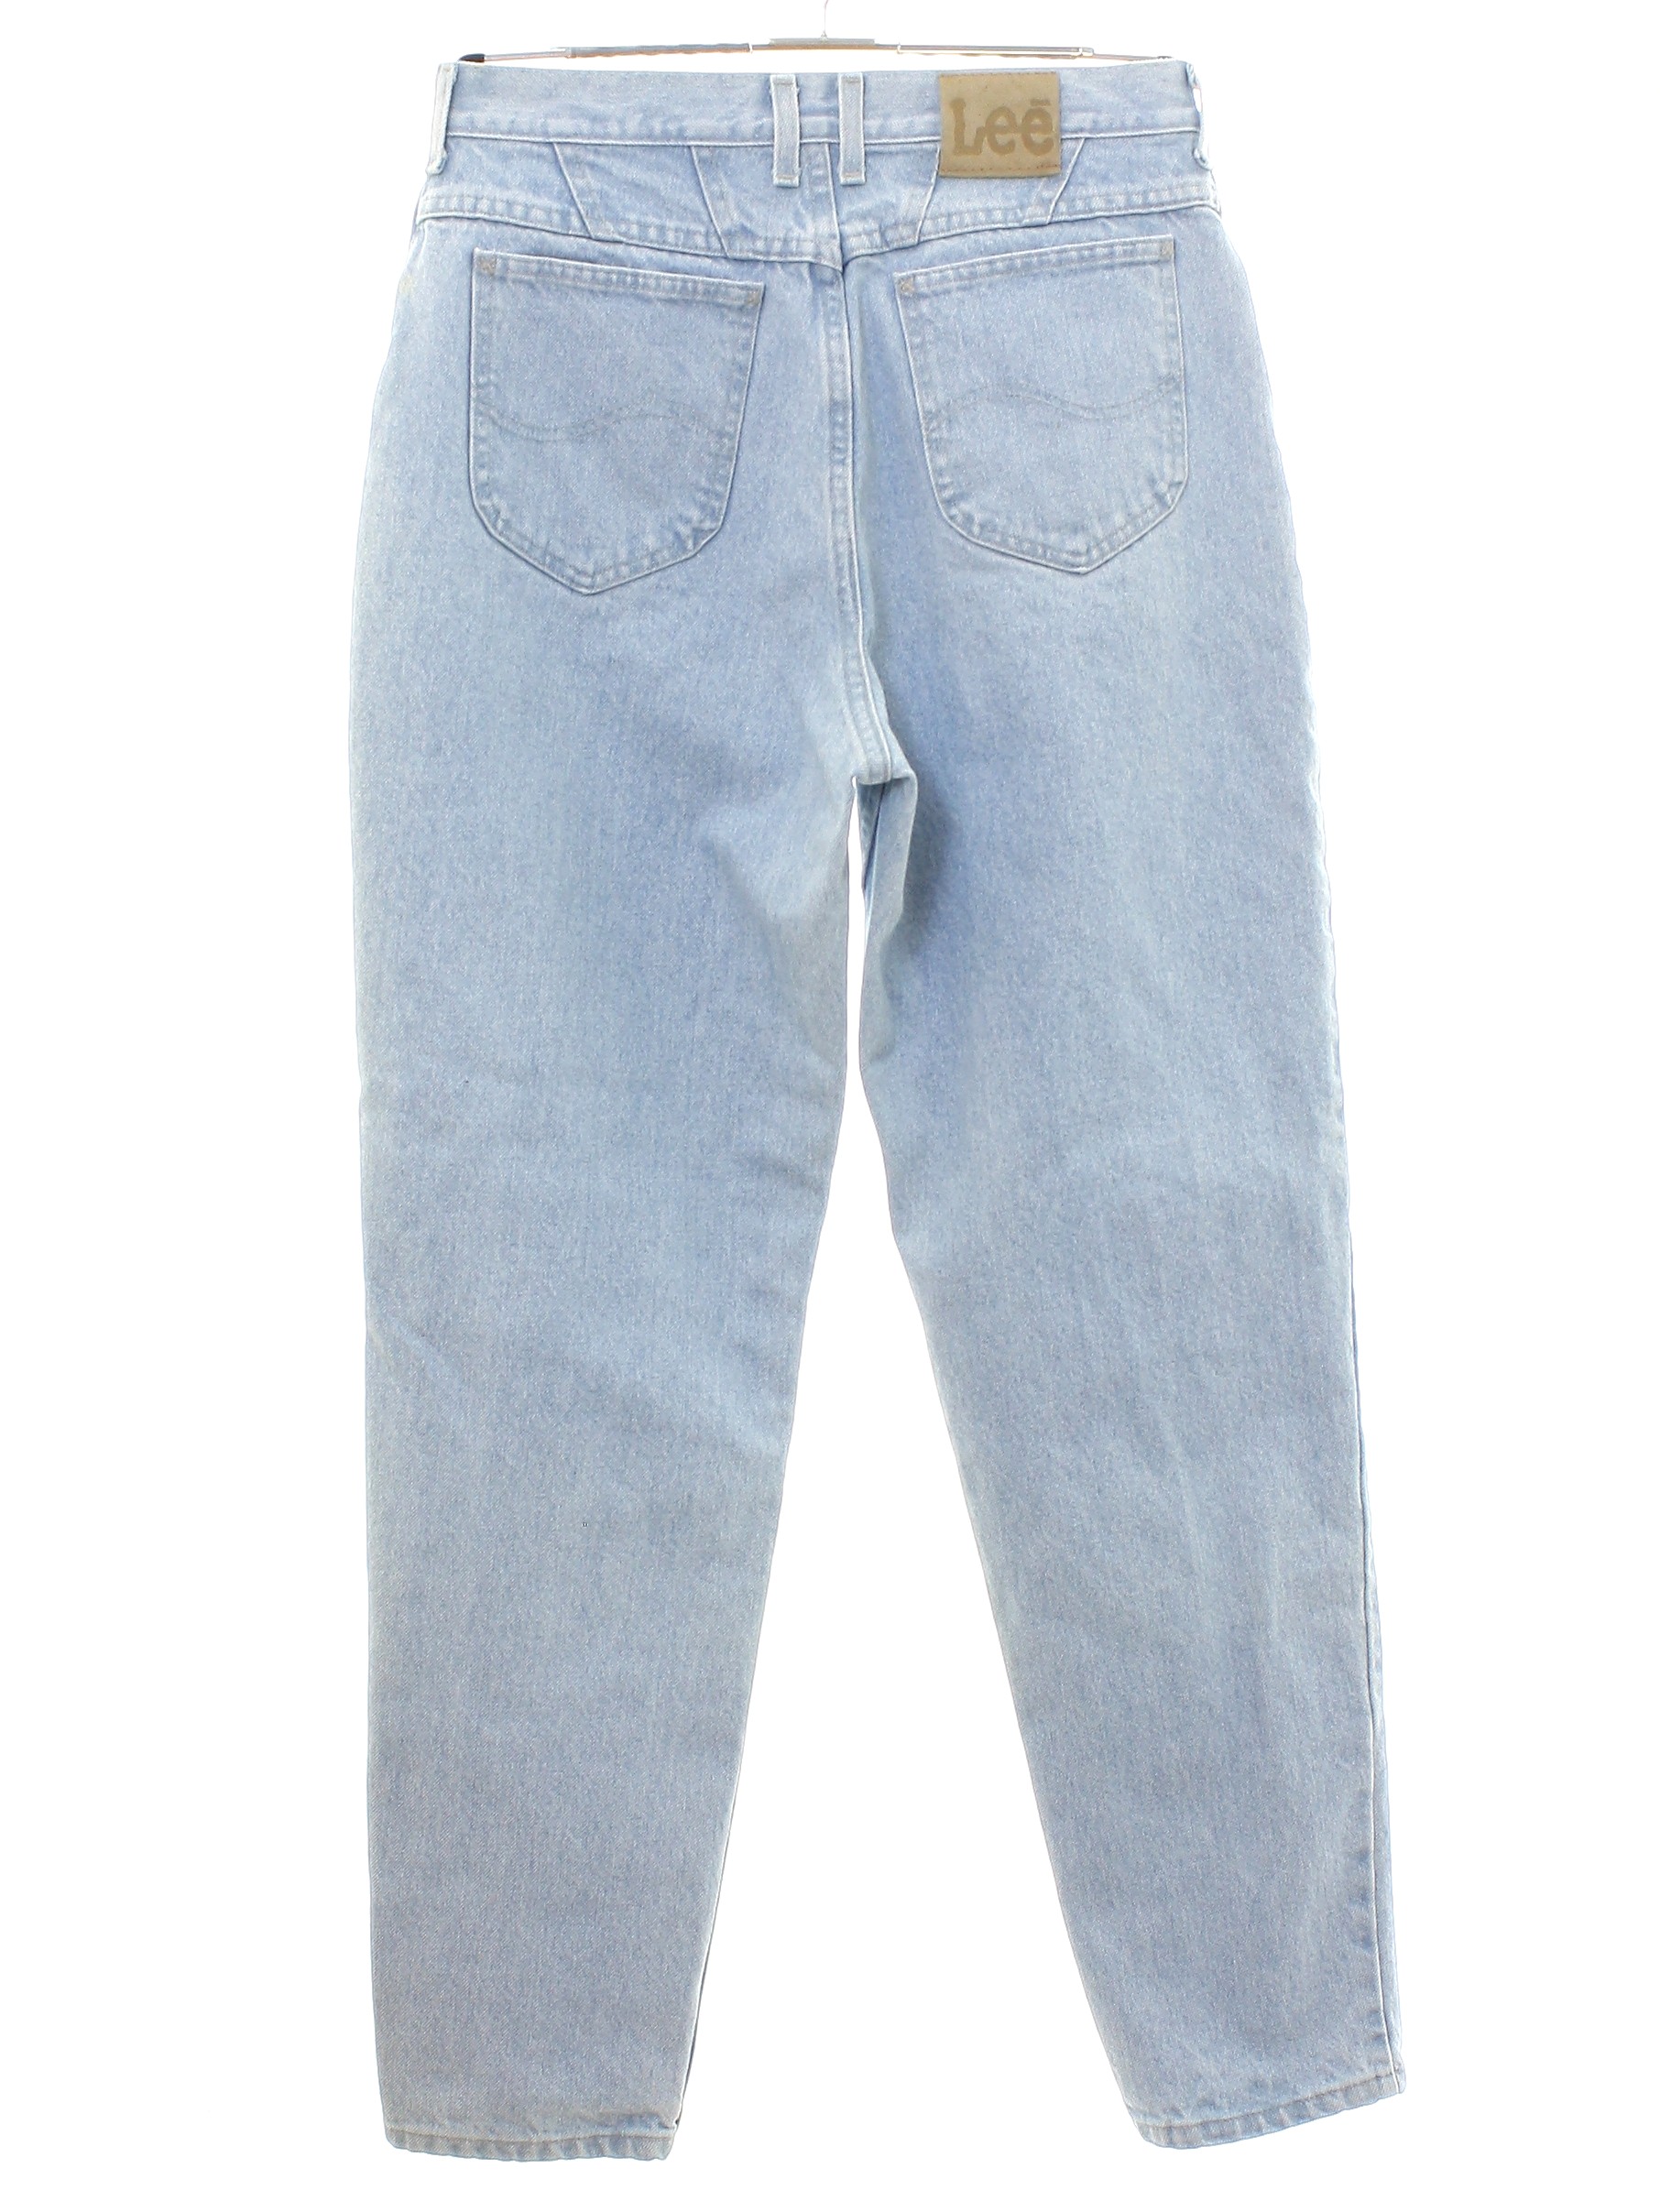 1990s Vintage Pants: 90s or newer -Lee- Womens light blue cotton denim ...